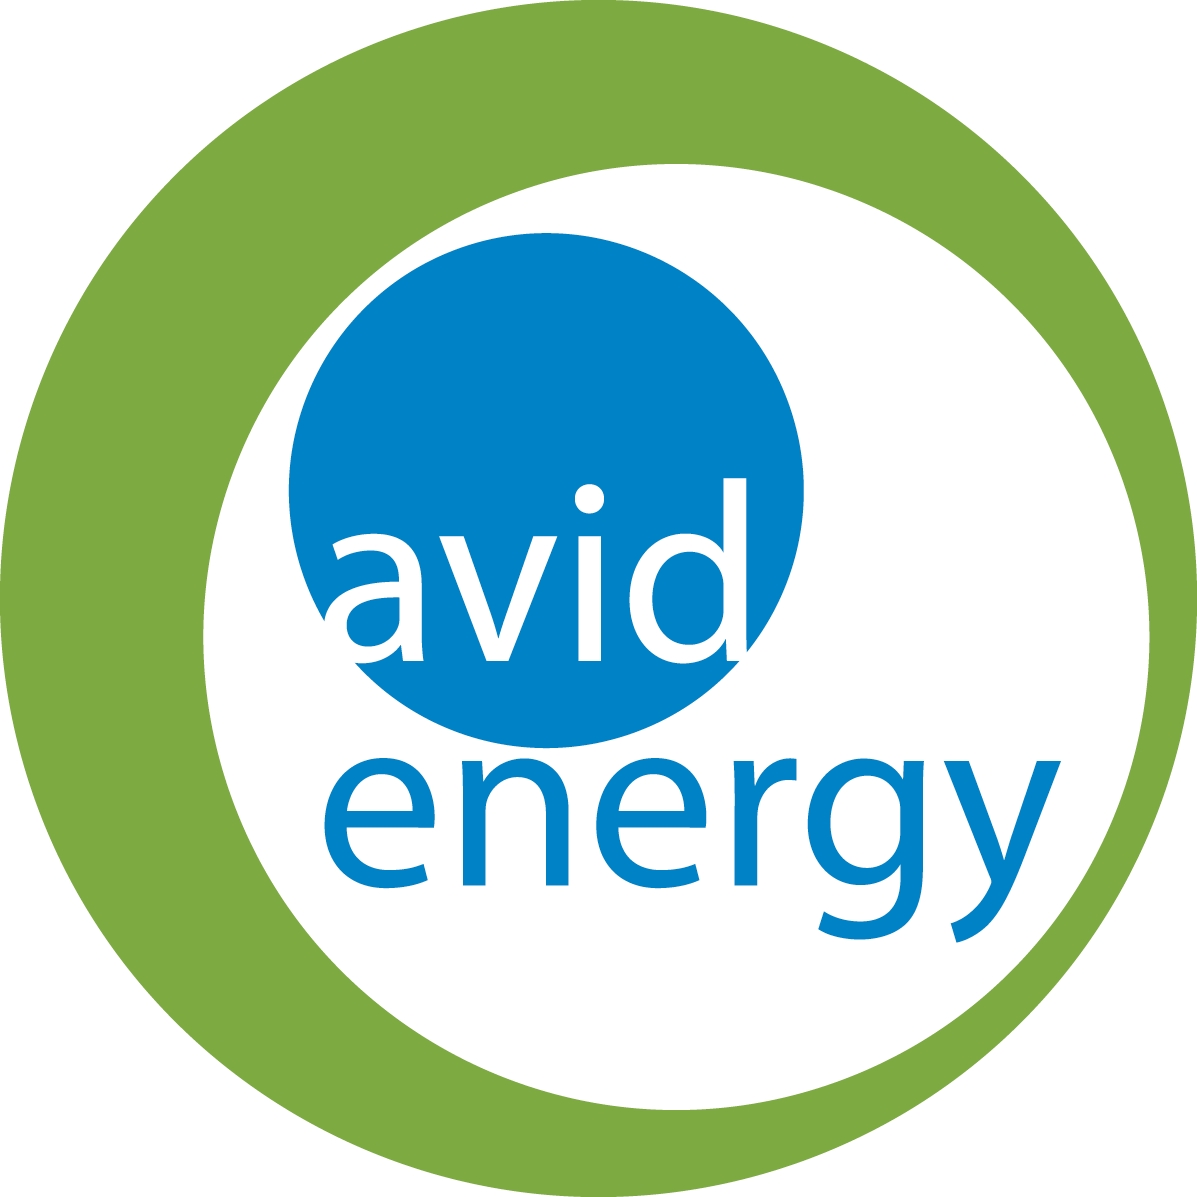 Avid Energy